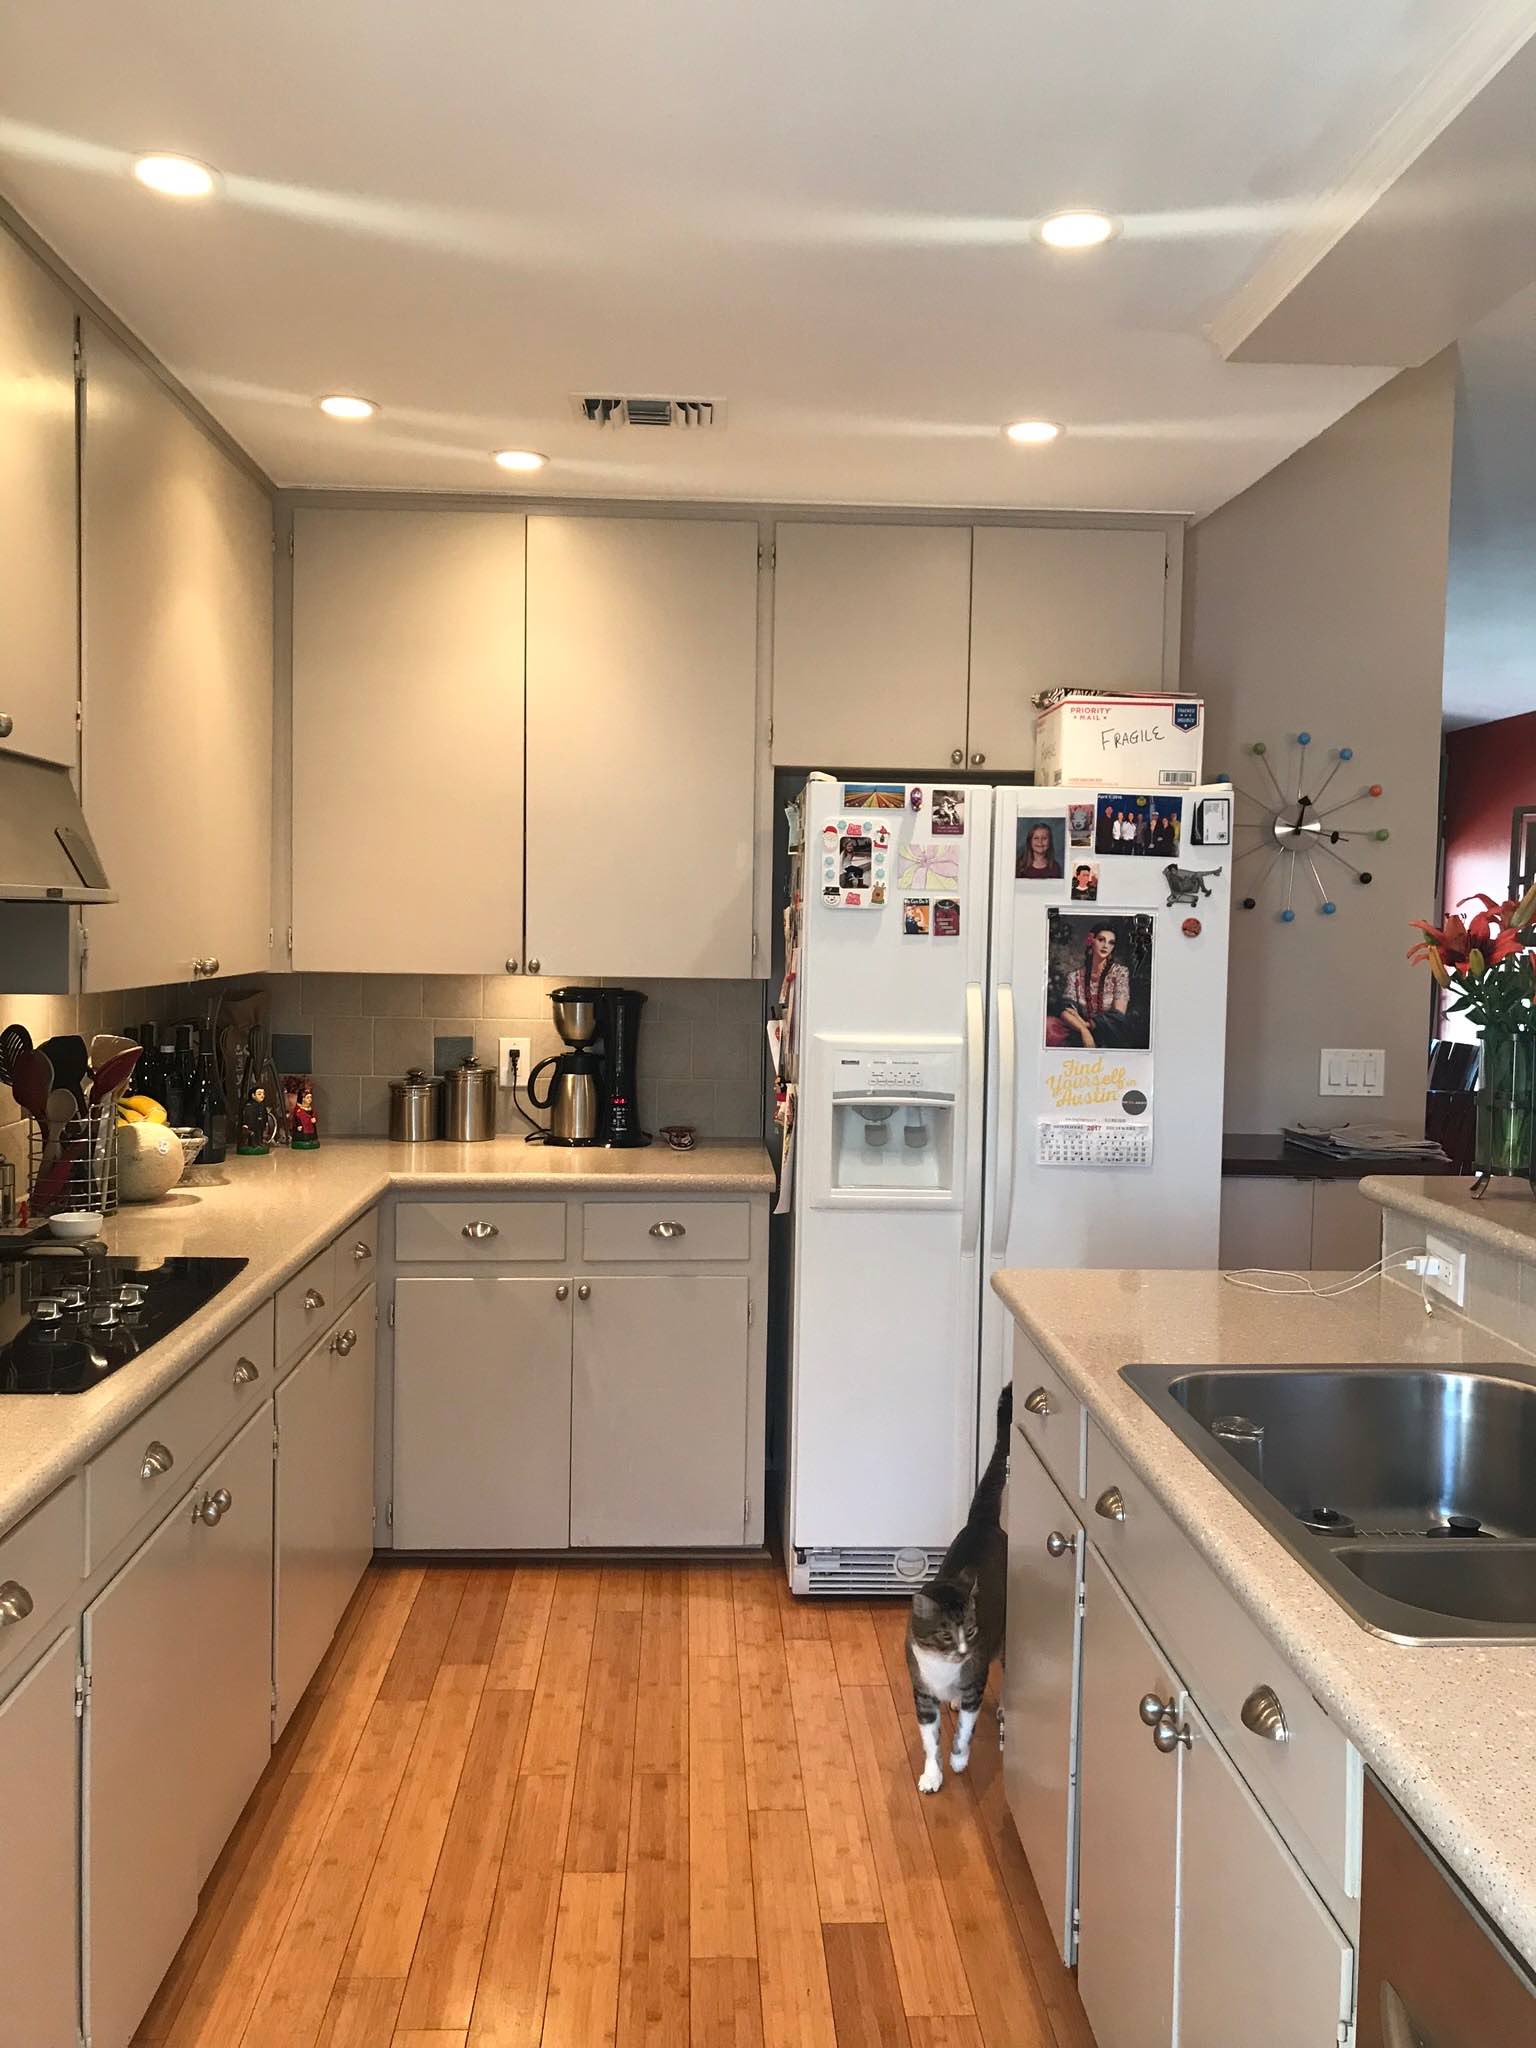 Kitchen View of Fridge